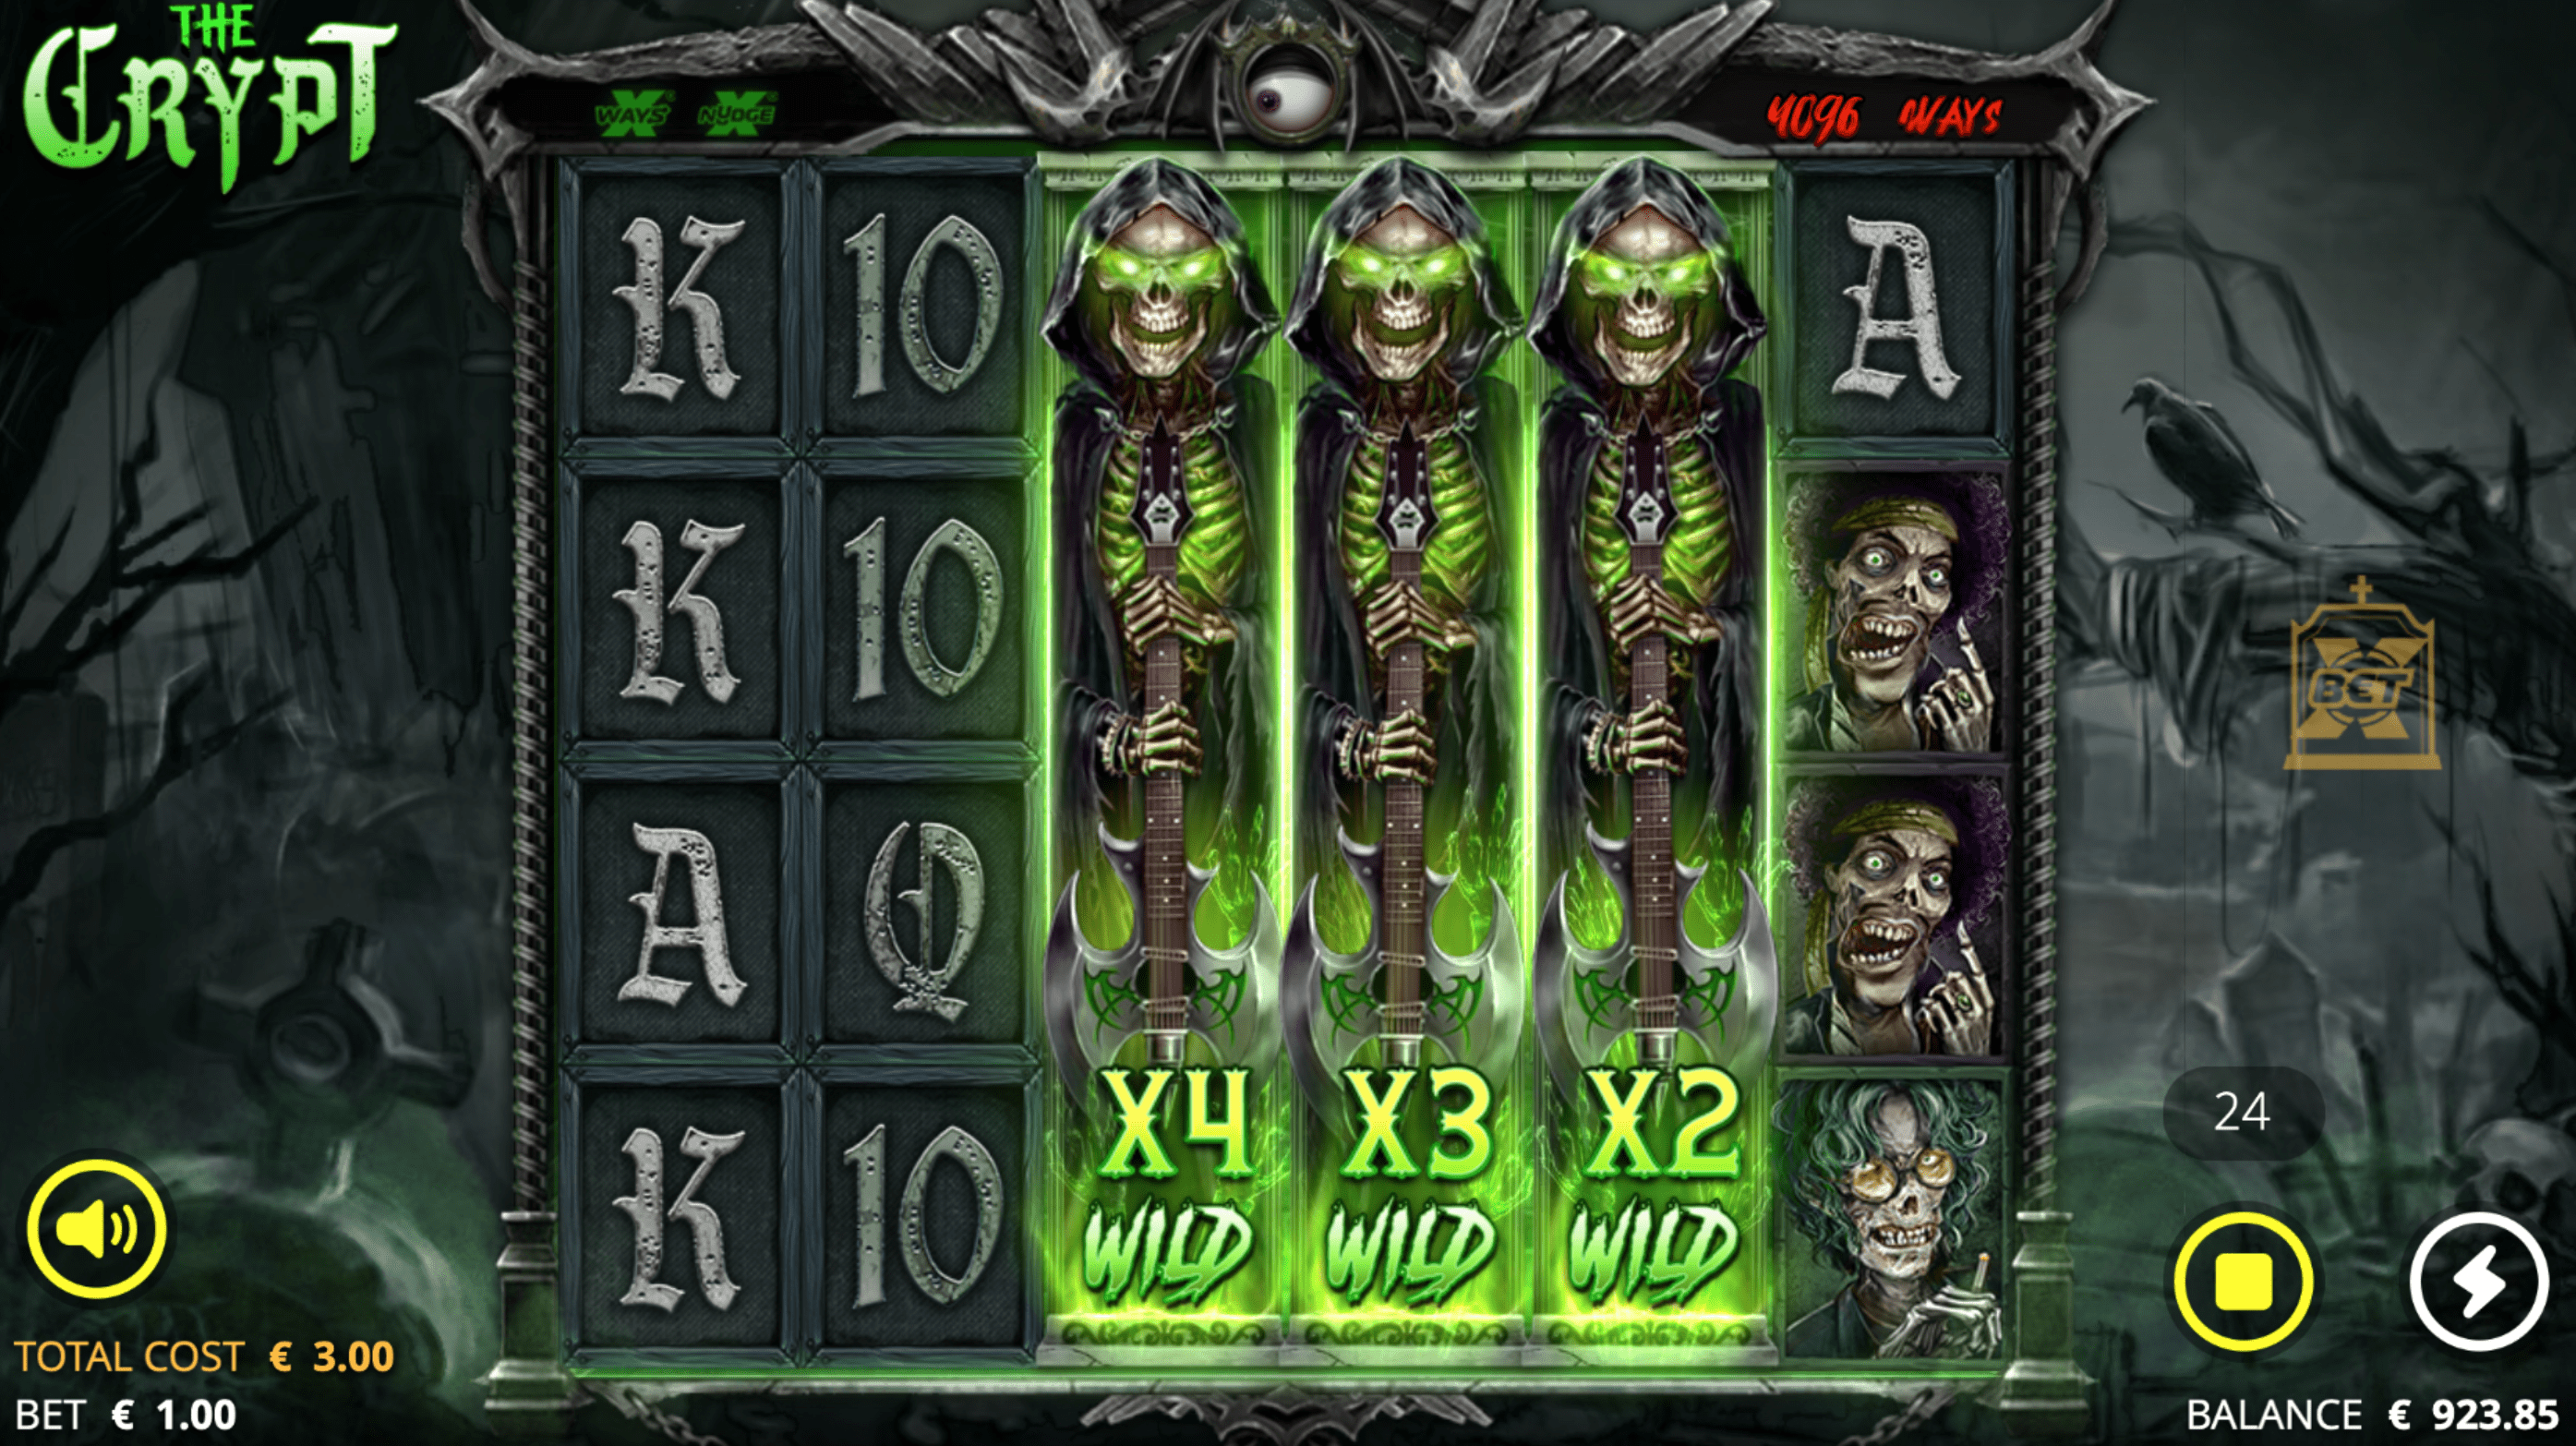 The Crypt Slot - xNudge Wild